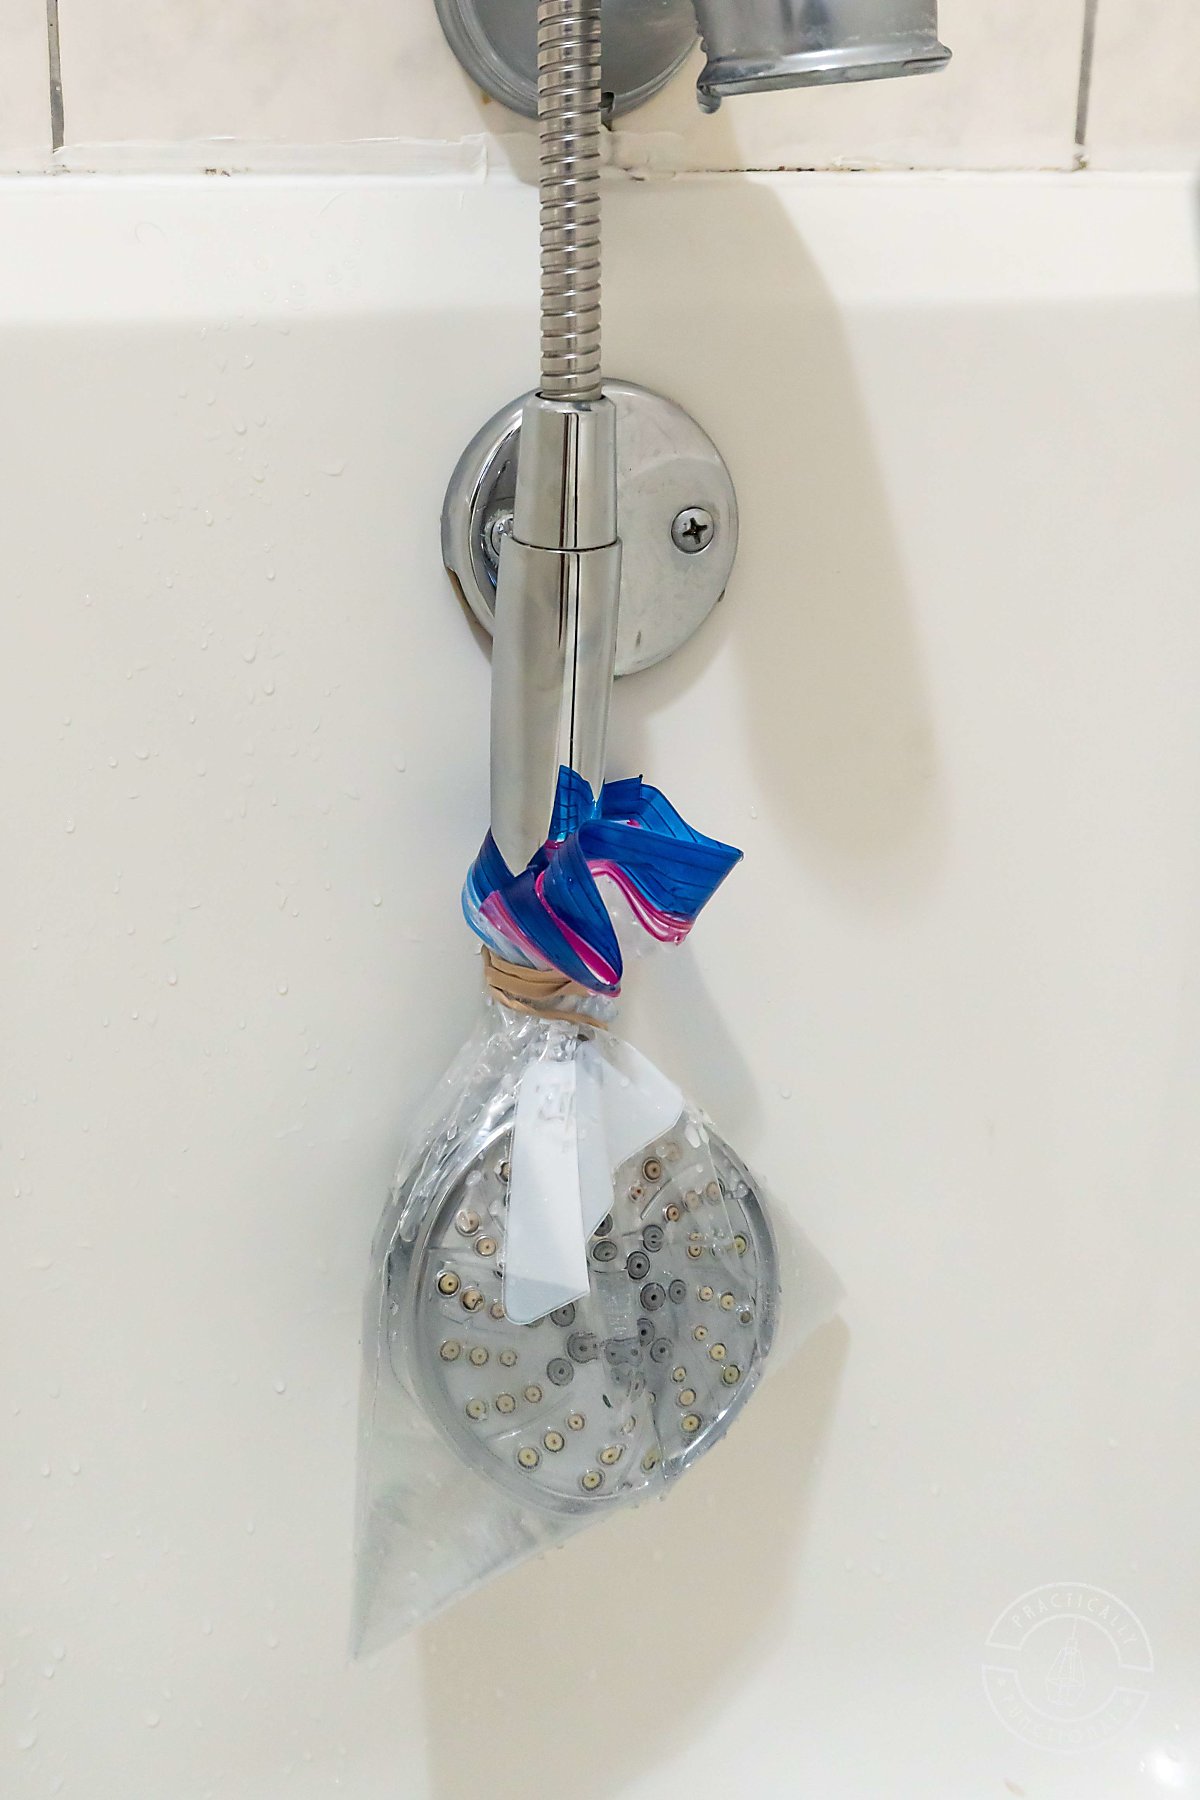 removable shower sprayer head soaking in vinegar in a ziploc bag